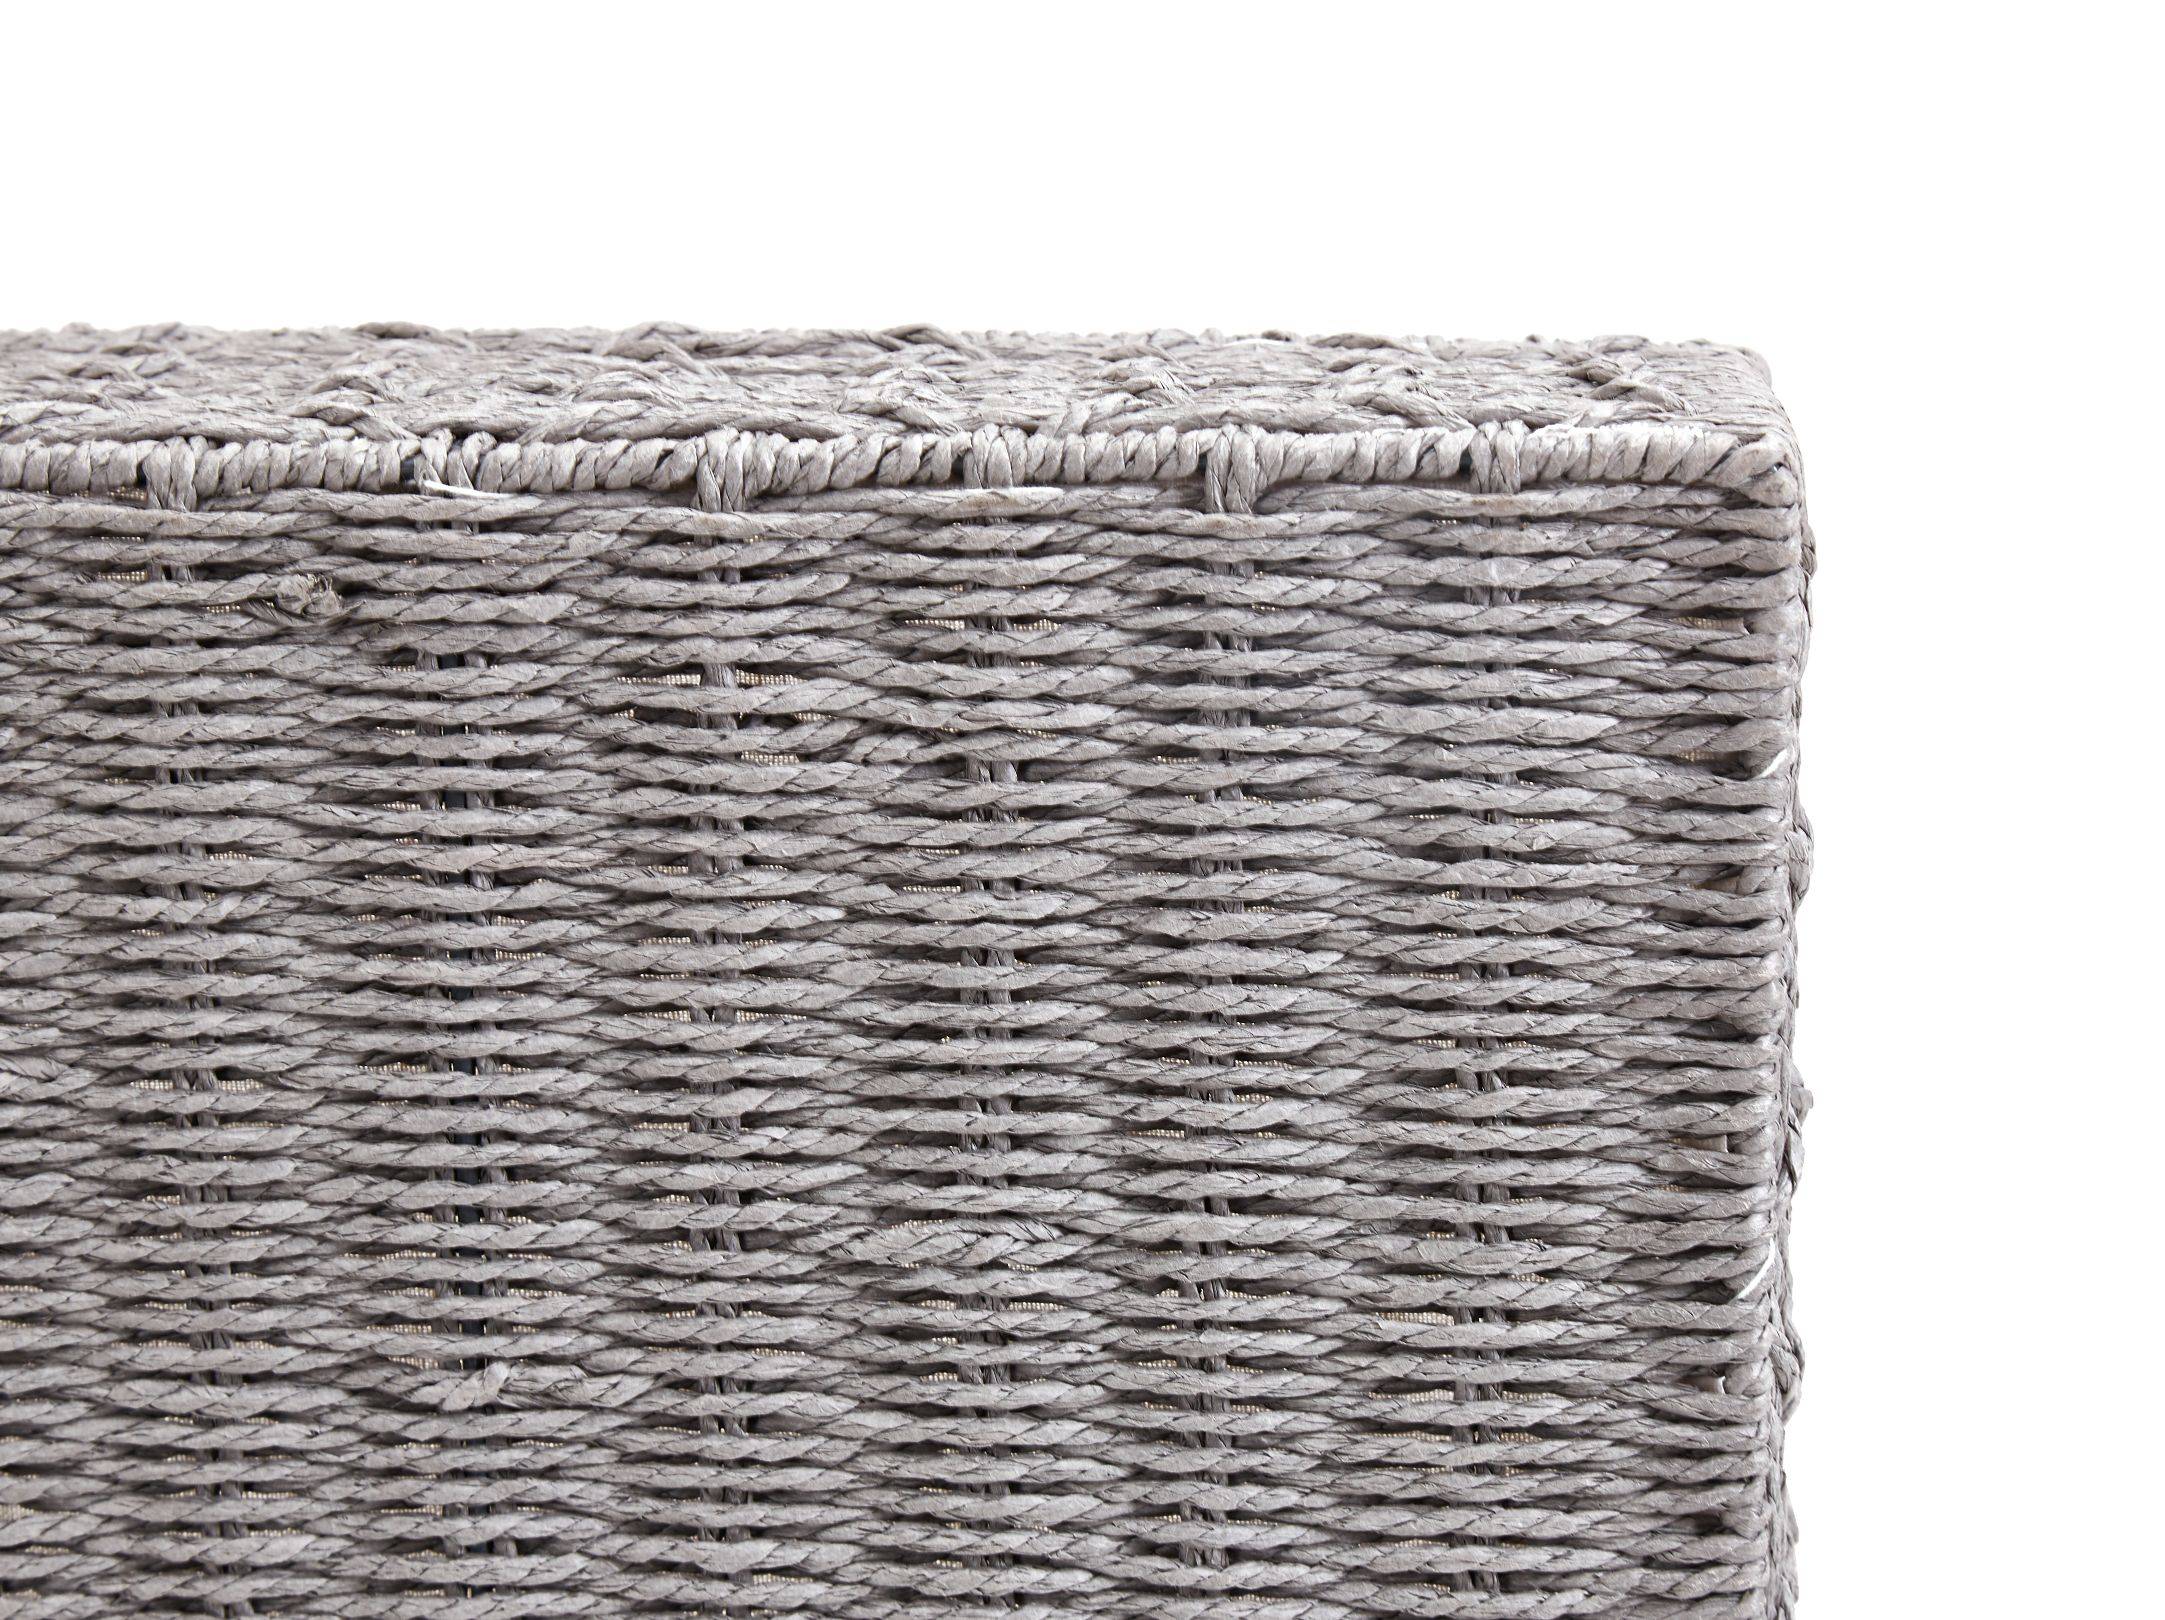 Durable fabric storage basket